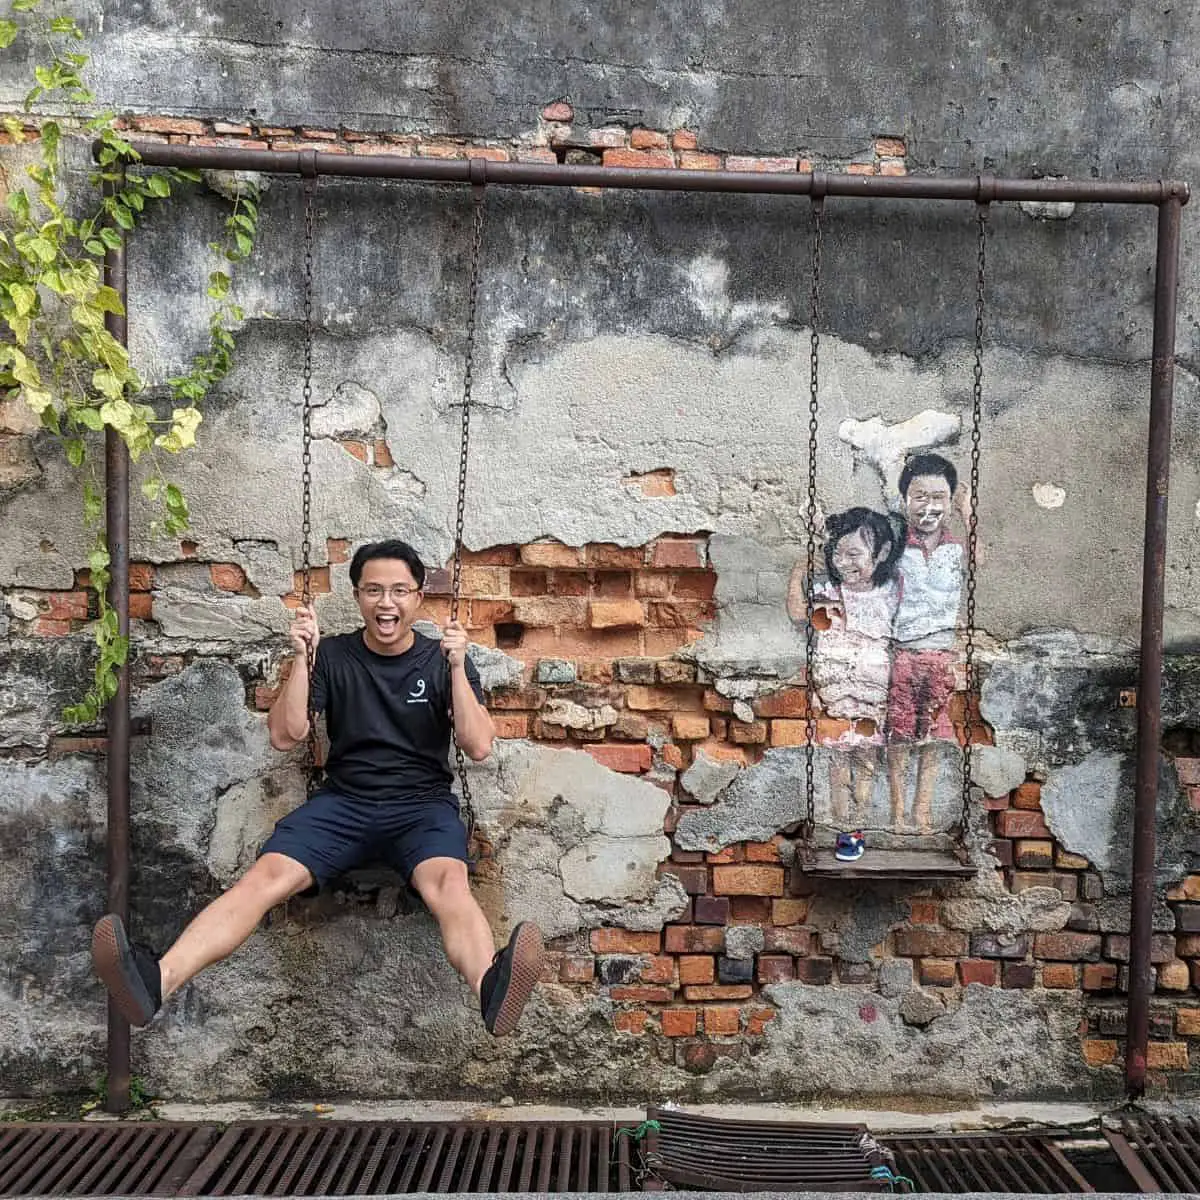 Penang Street Art in Georgetown of Brother and Sister on the Swing by Louis Gan Yee Loong